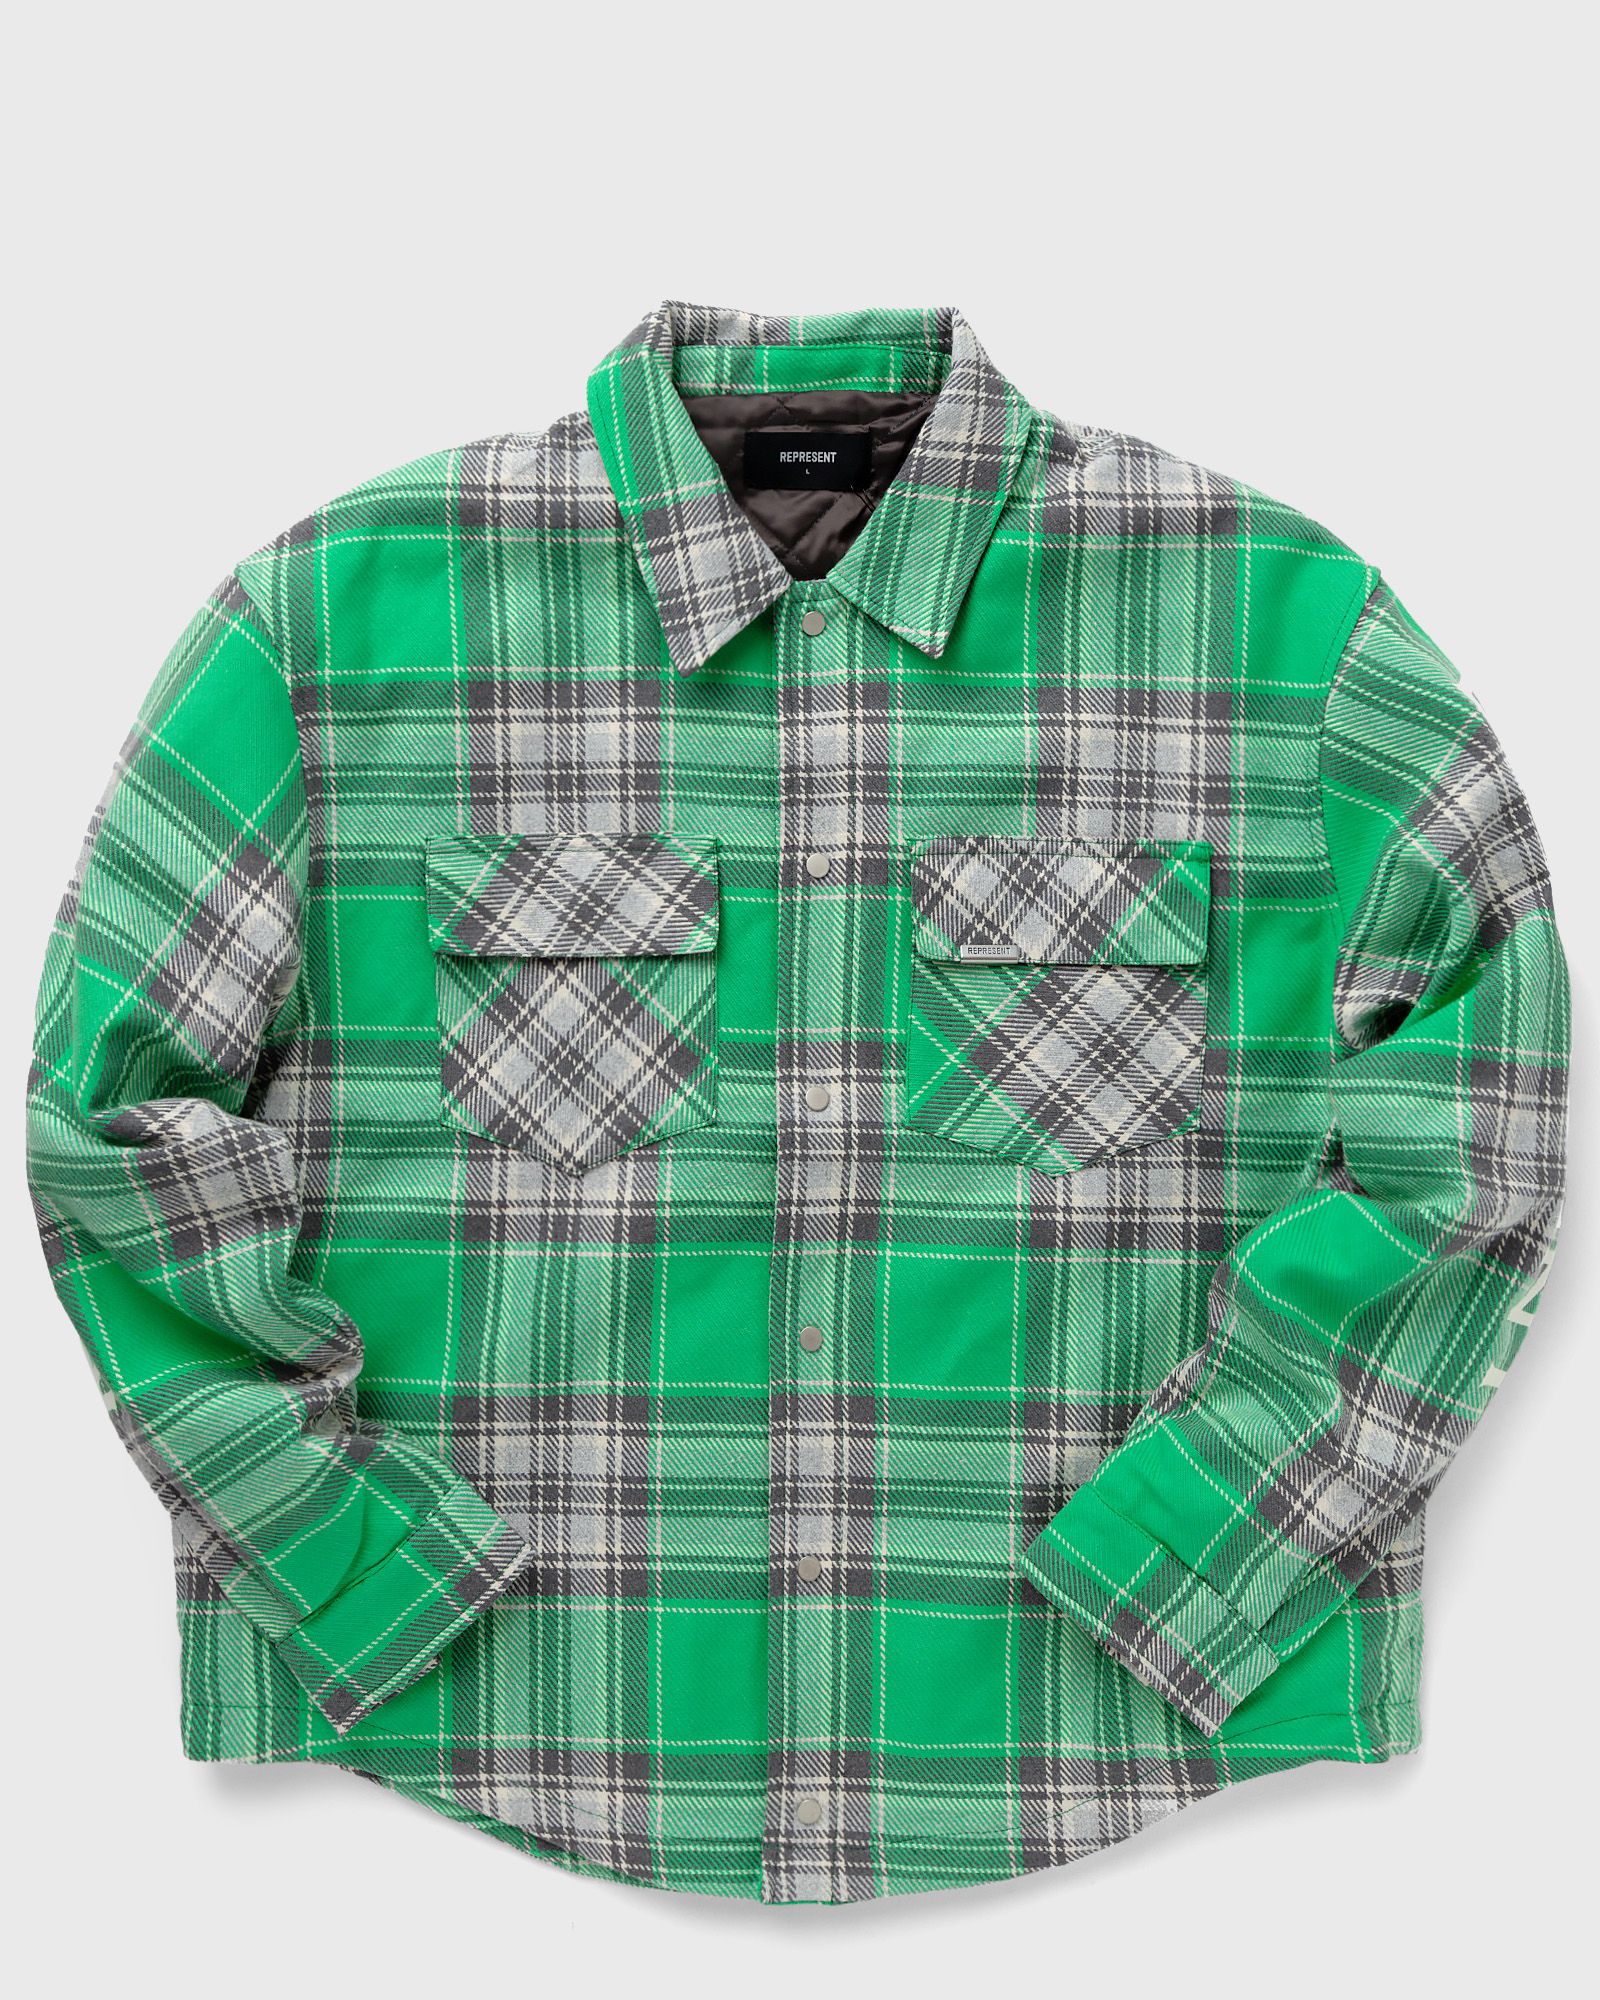 Represent - quilted flannel shirt men overshirts green in größe:xl